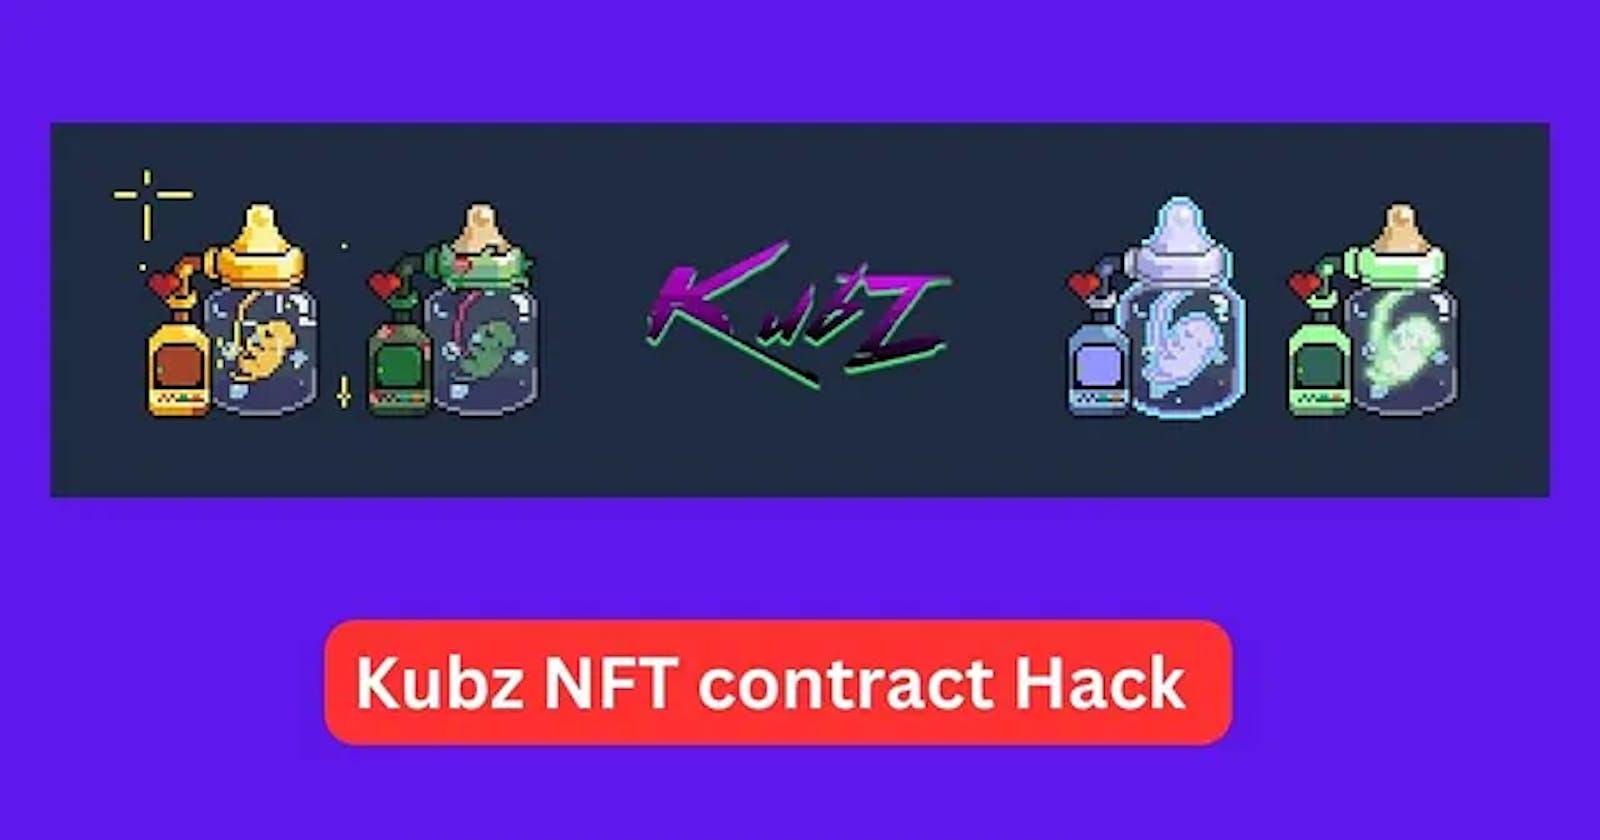 Recreating Kubz NFT Hack and understanding what went wrong